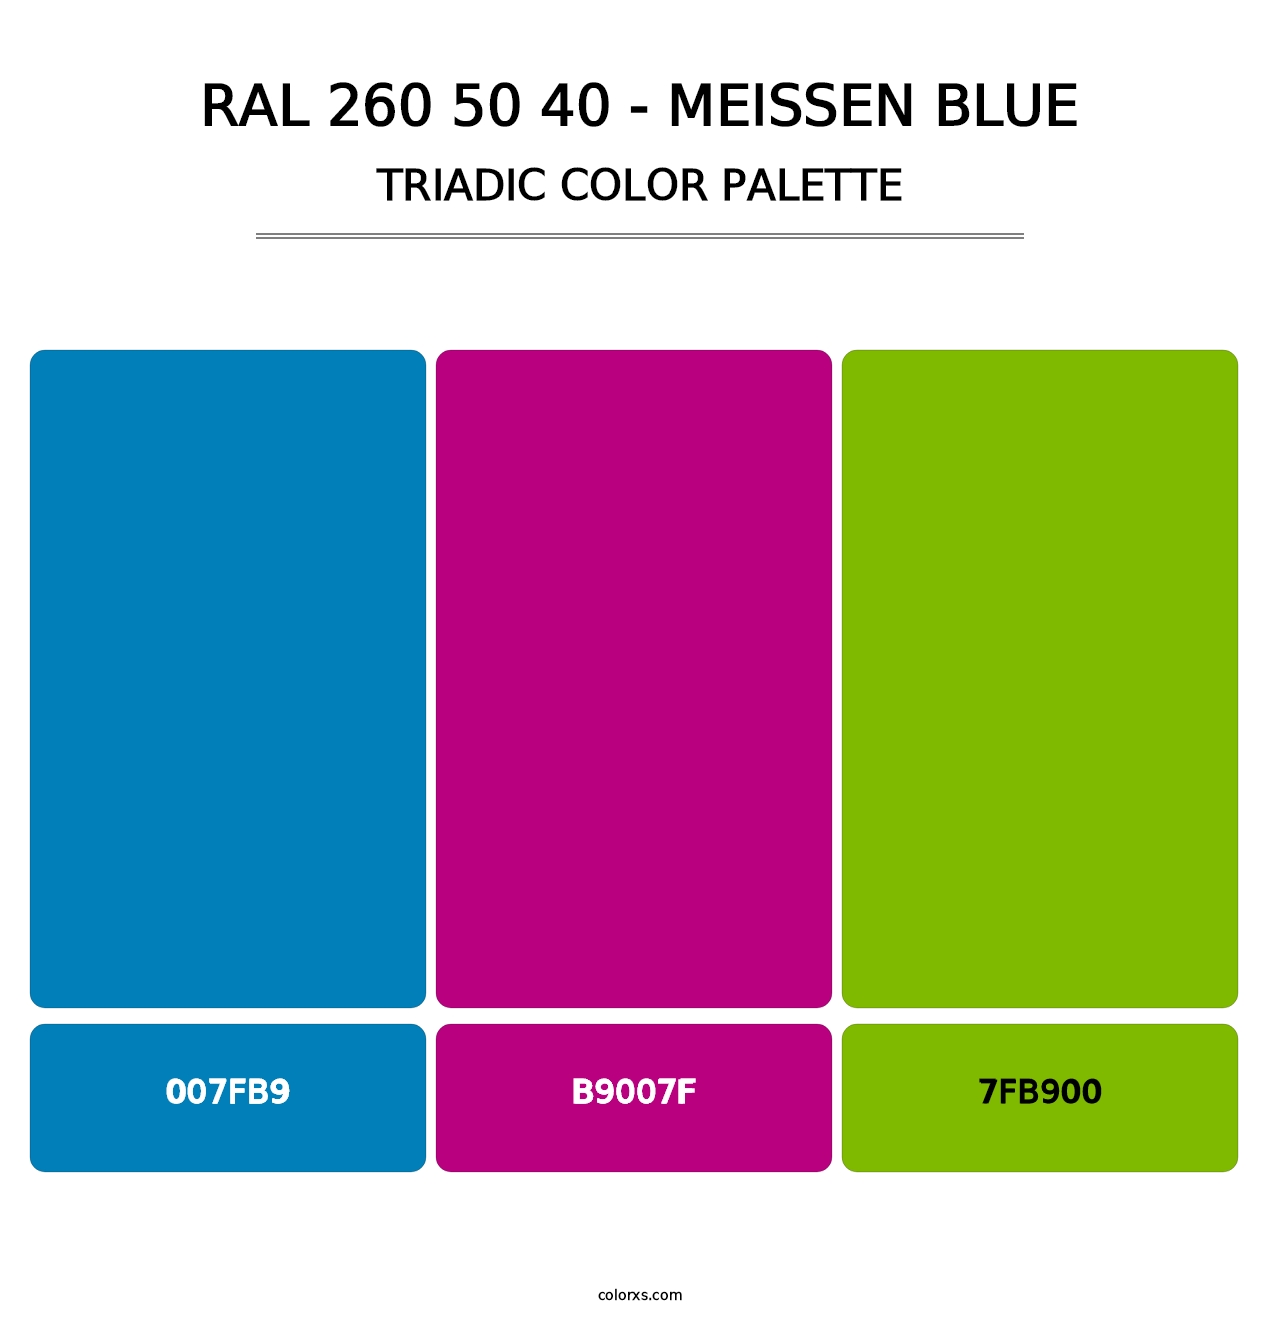 RAL 260 50 40 - Meissen Blue - Triadic Color Palette